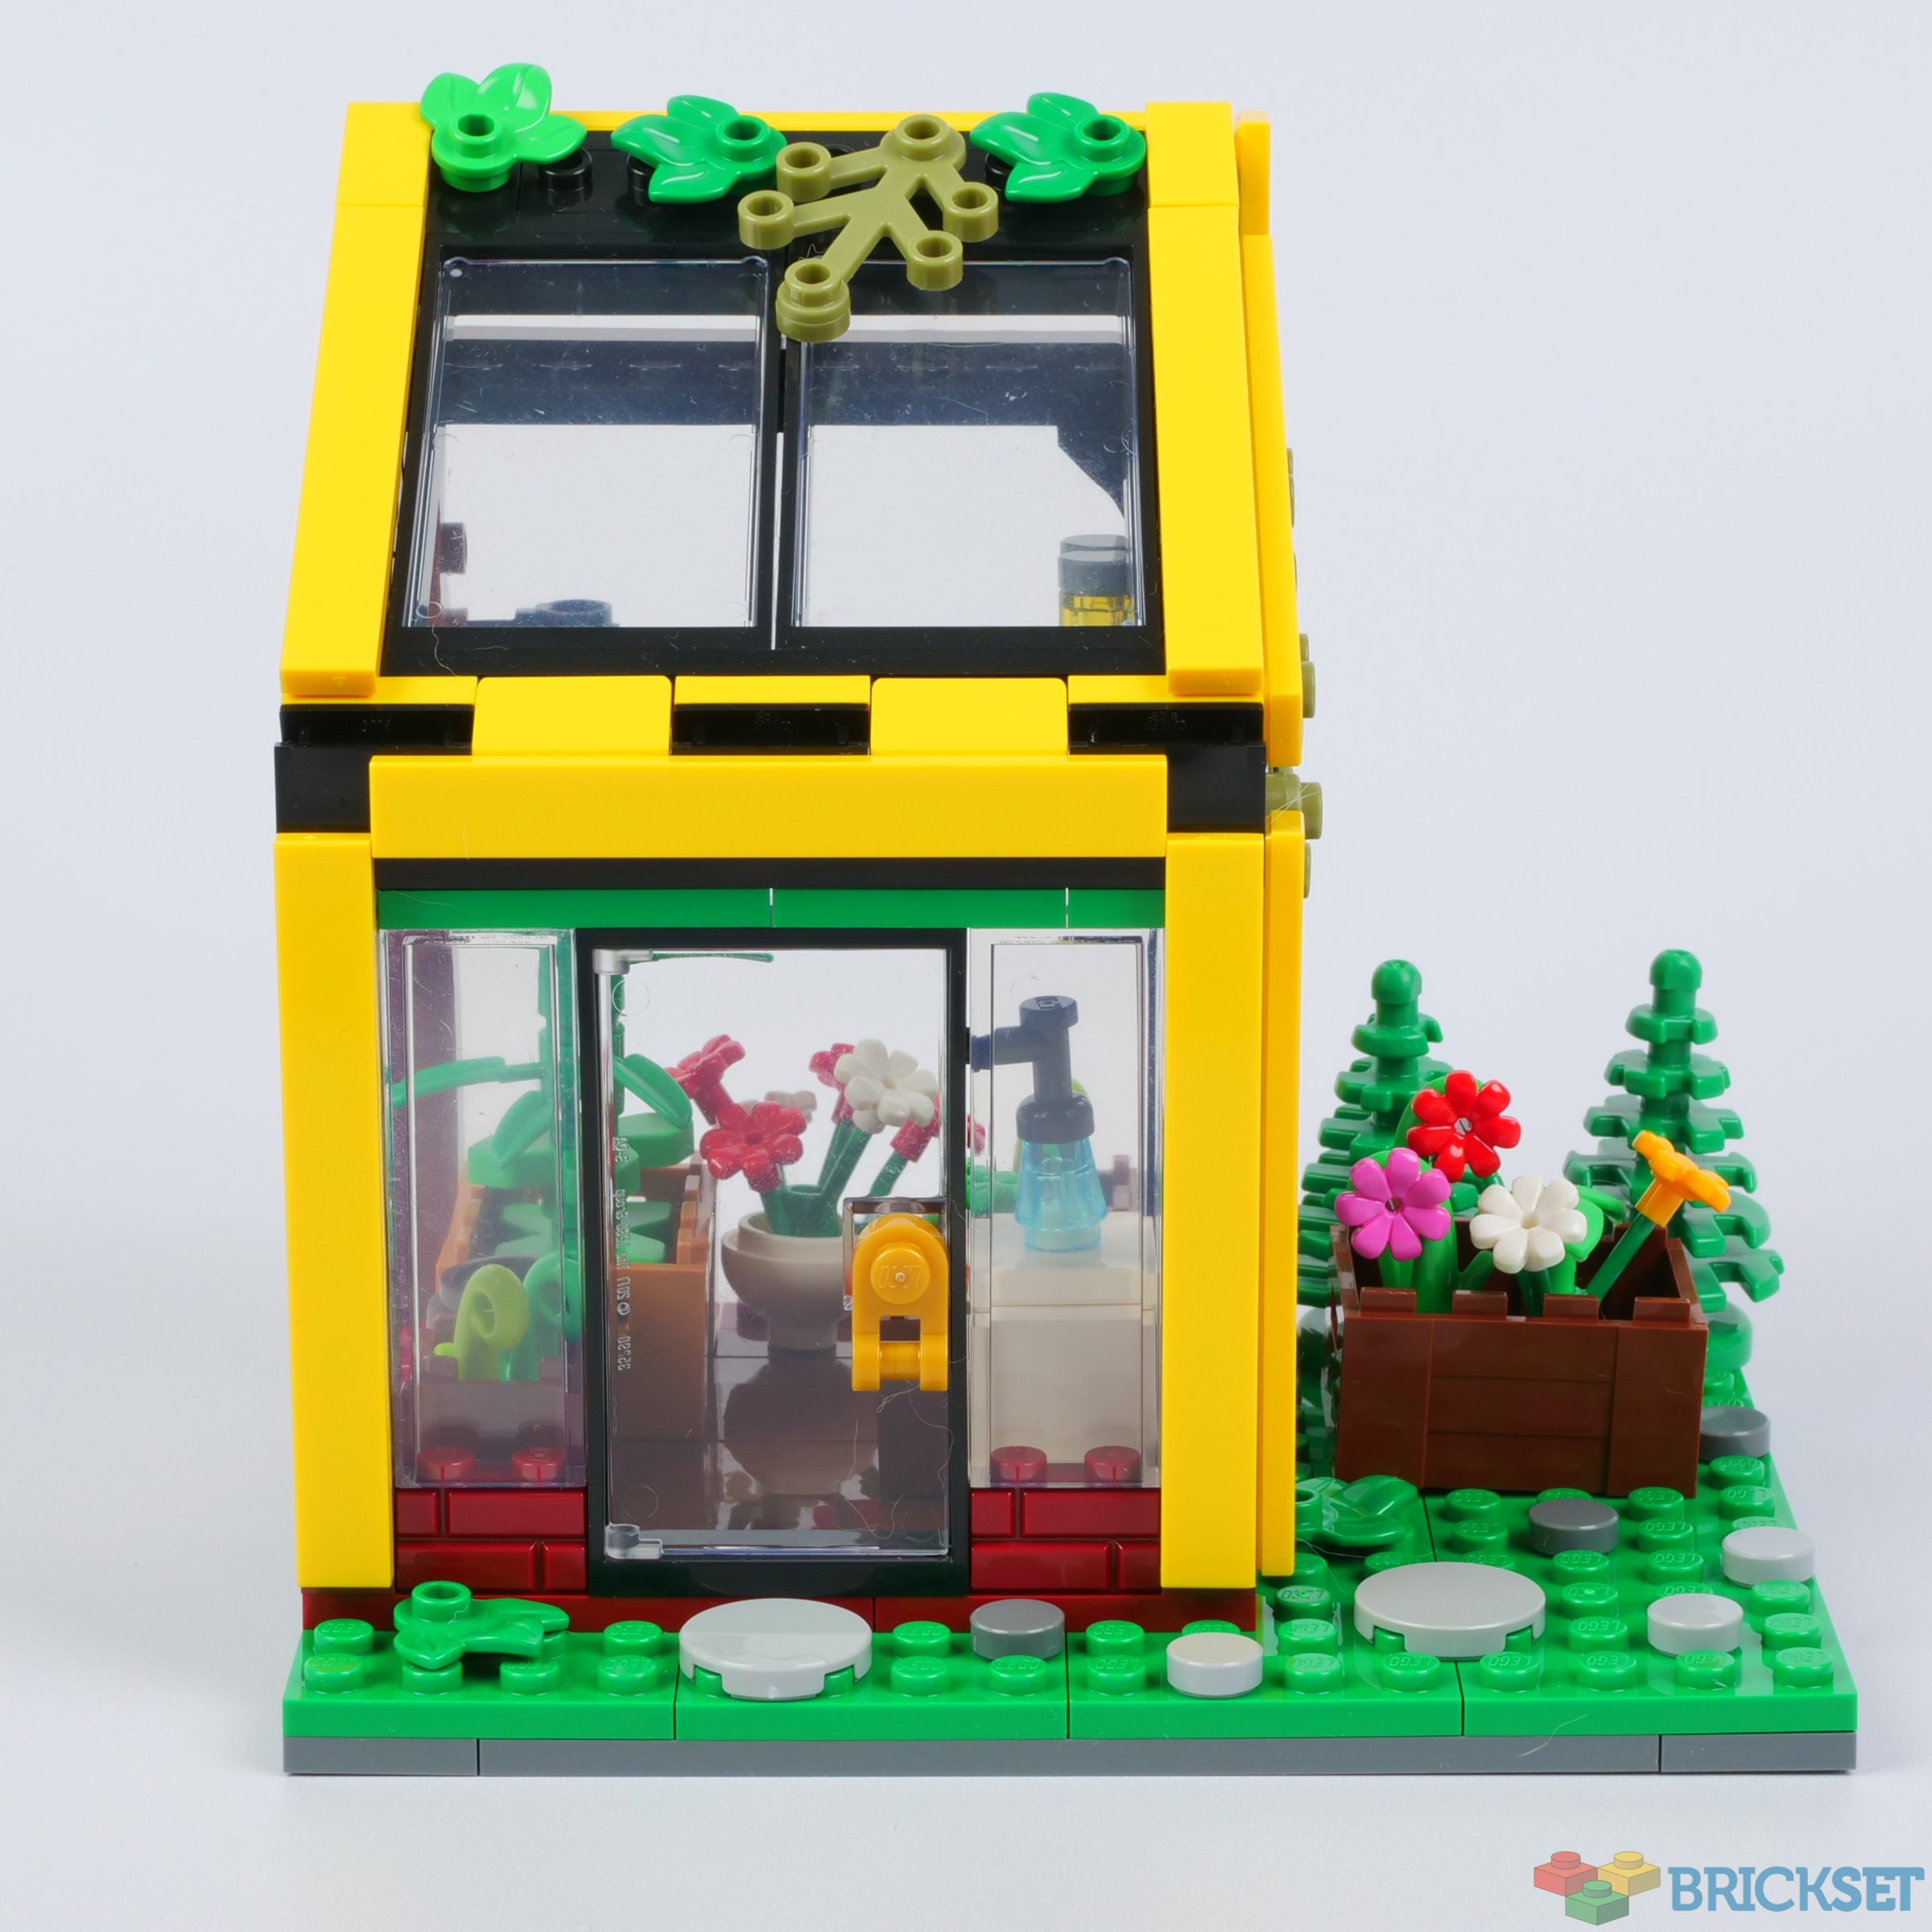 2 Lego Ninjago Sets plus loose Ninjago minifigures - toys & games - by  owner - sale - craigslist